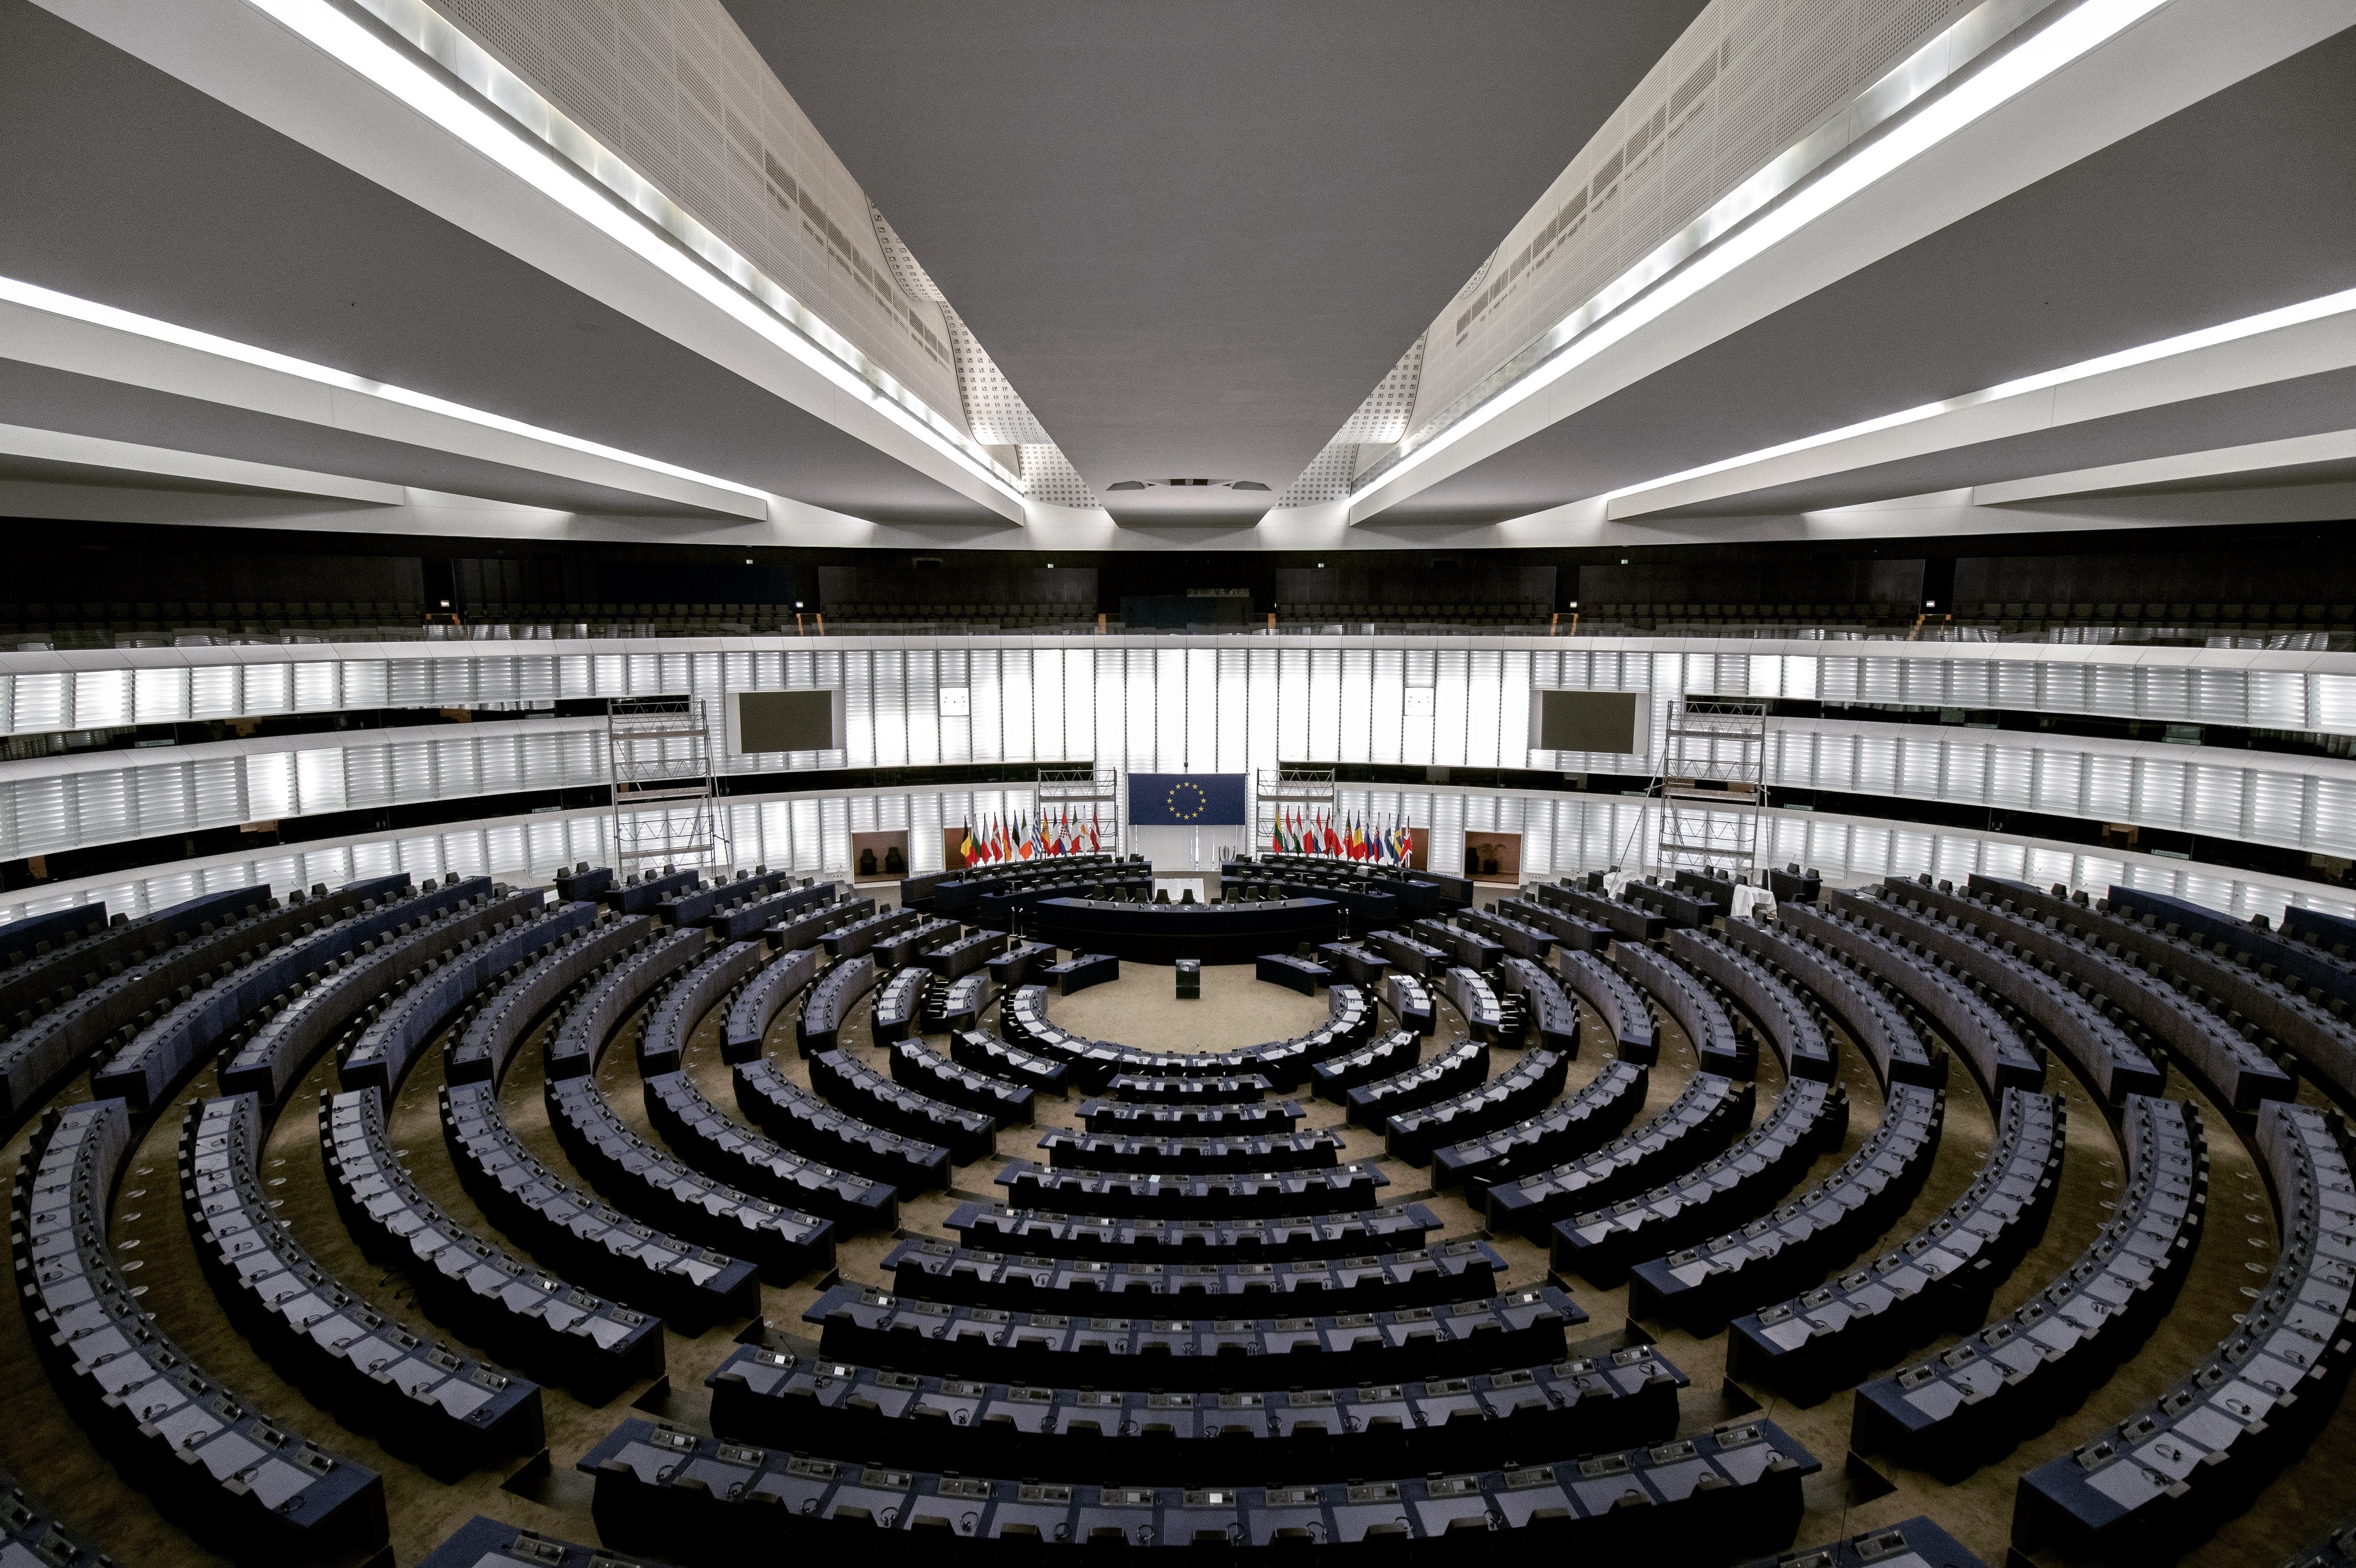 Le parlement européen à Strasbourg - Photo by Frederic Köberl on Unsplash